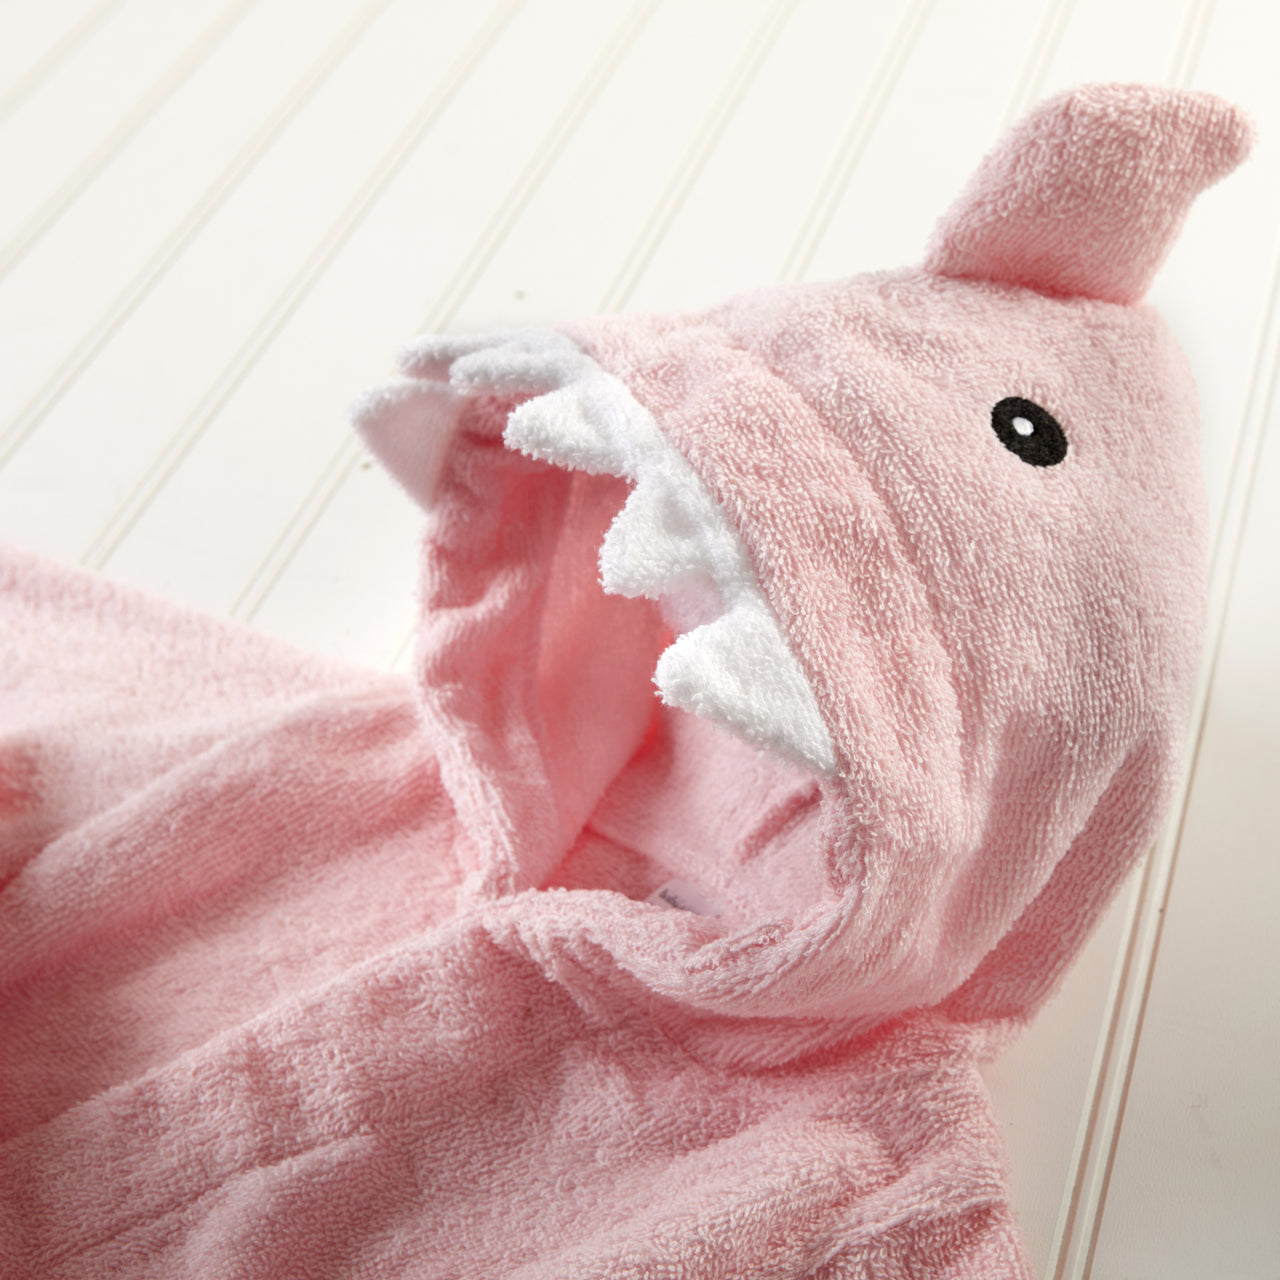 Let the Fin Begin Pink Shark Robe (0-9m)